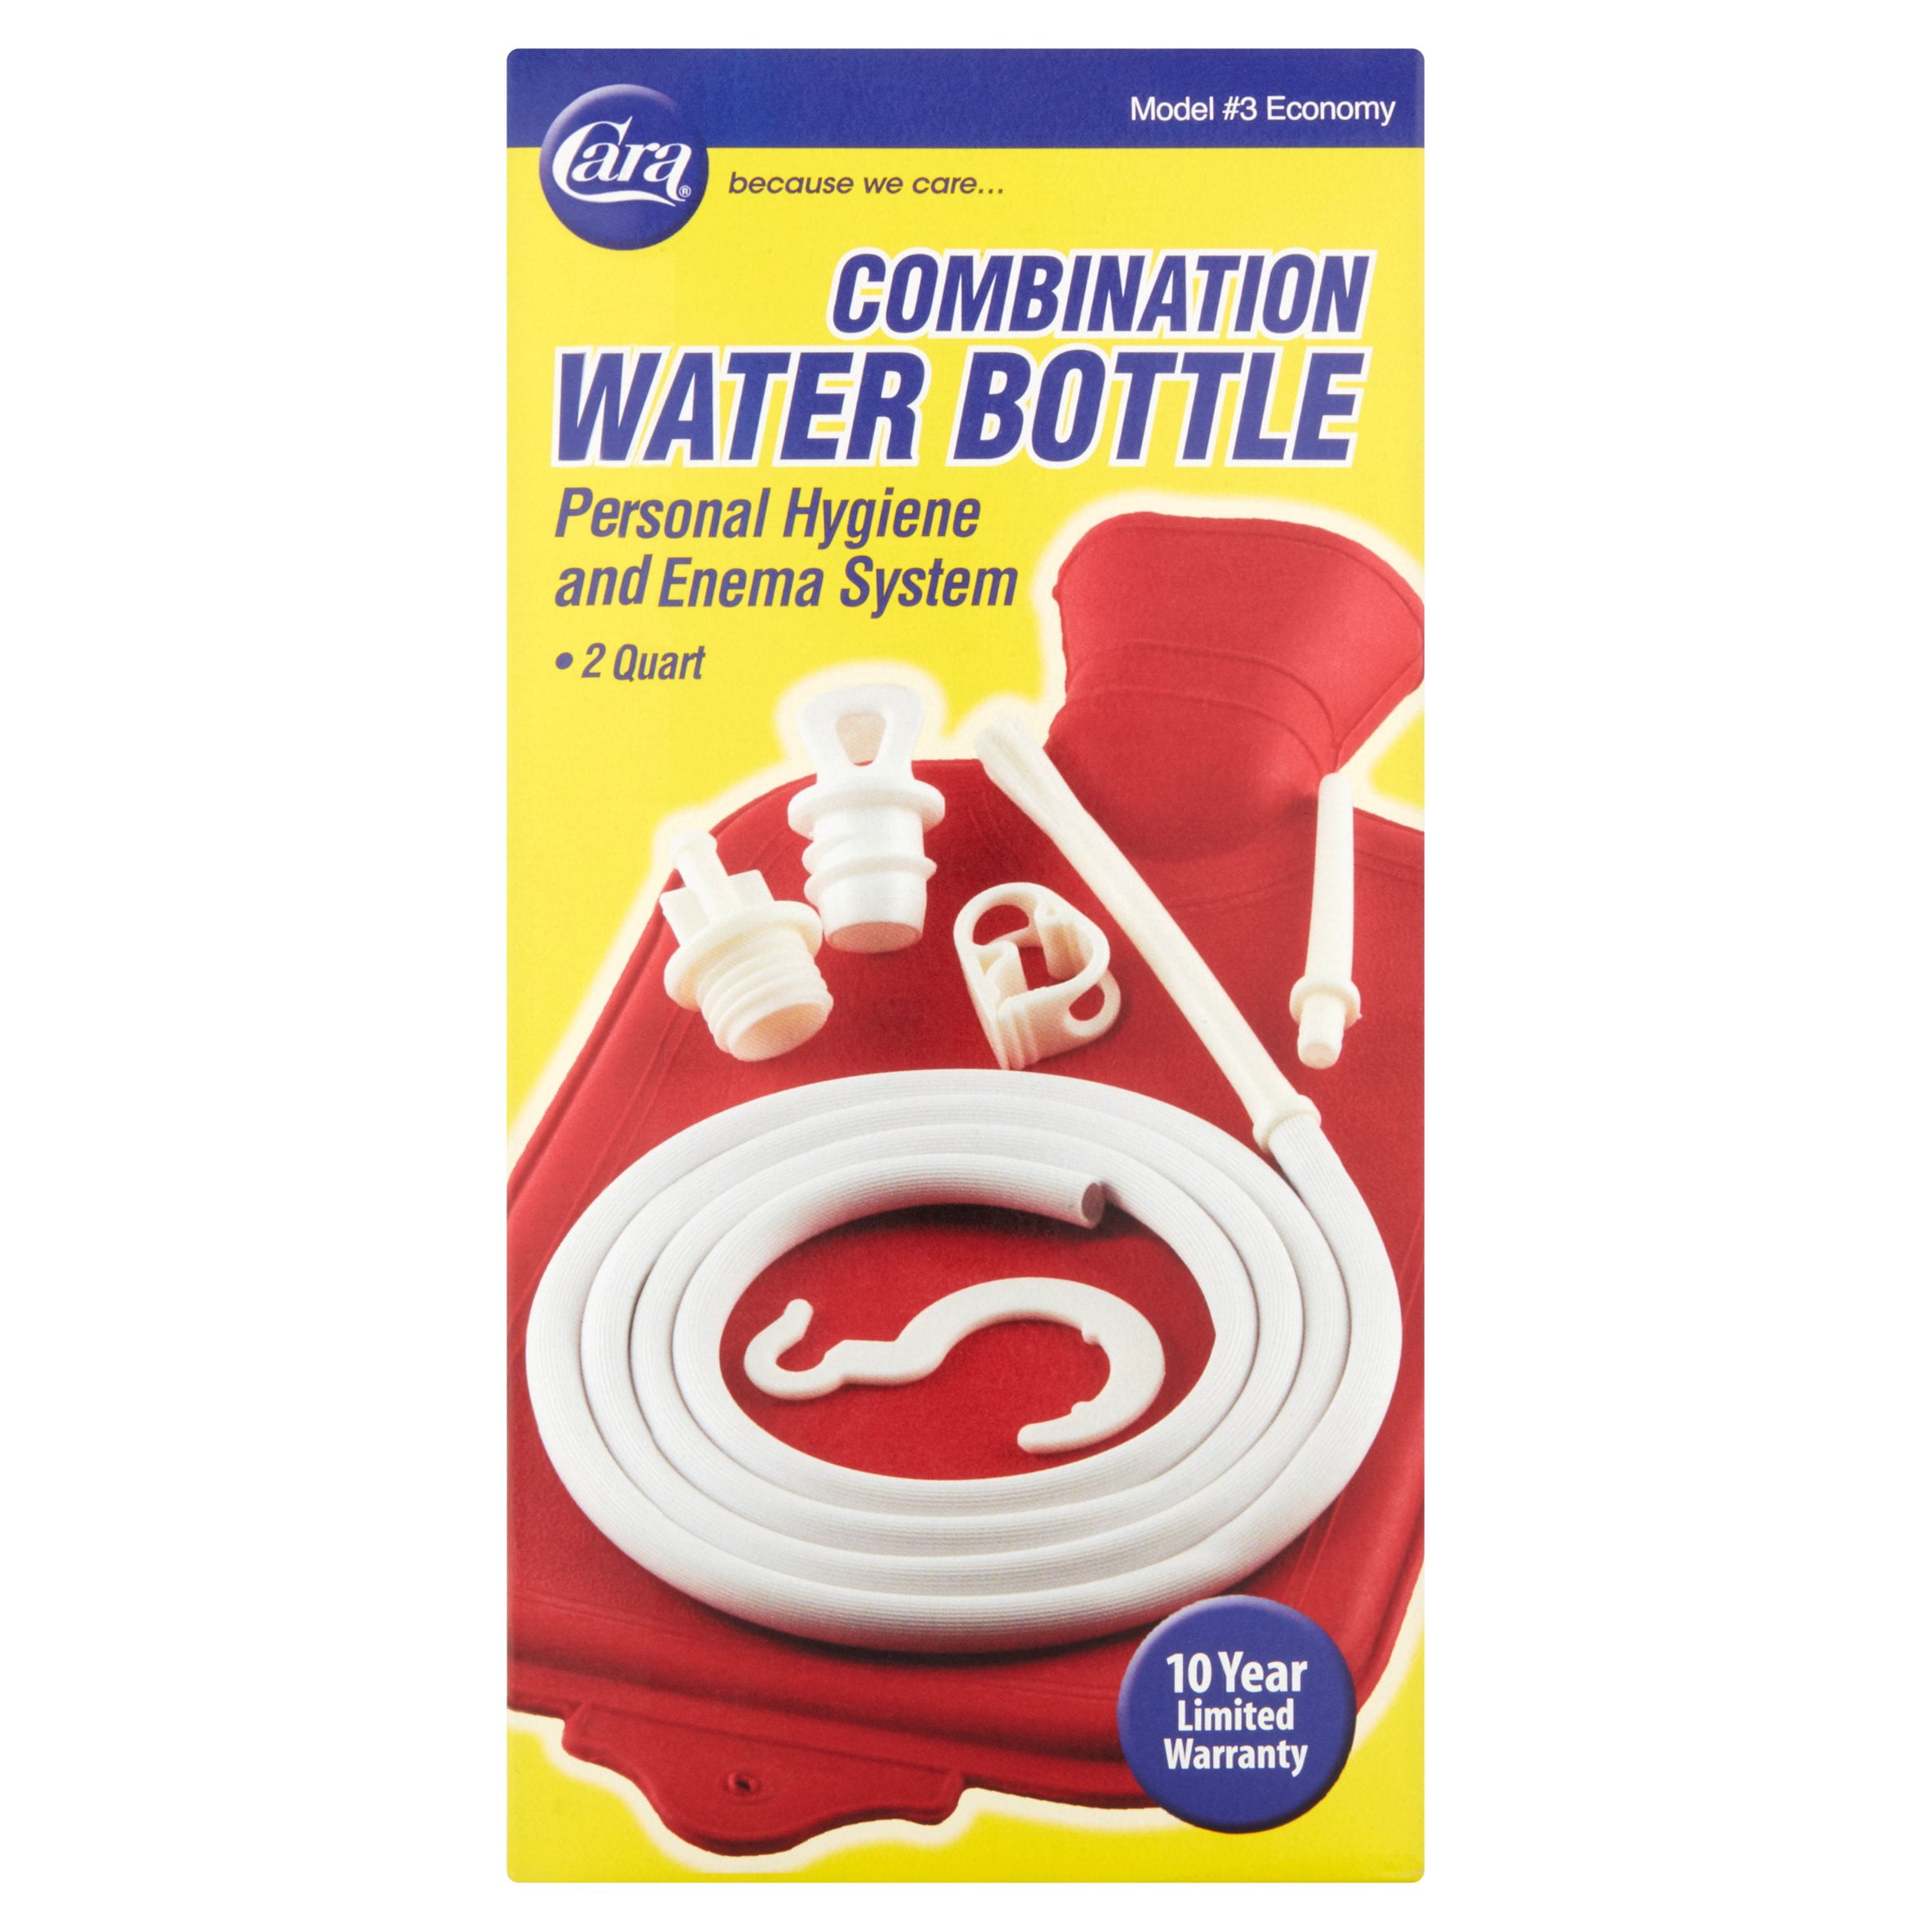 Cara Water Bottle Combination